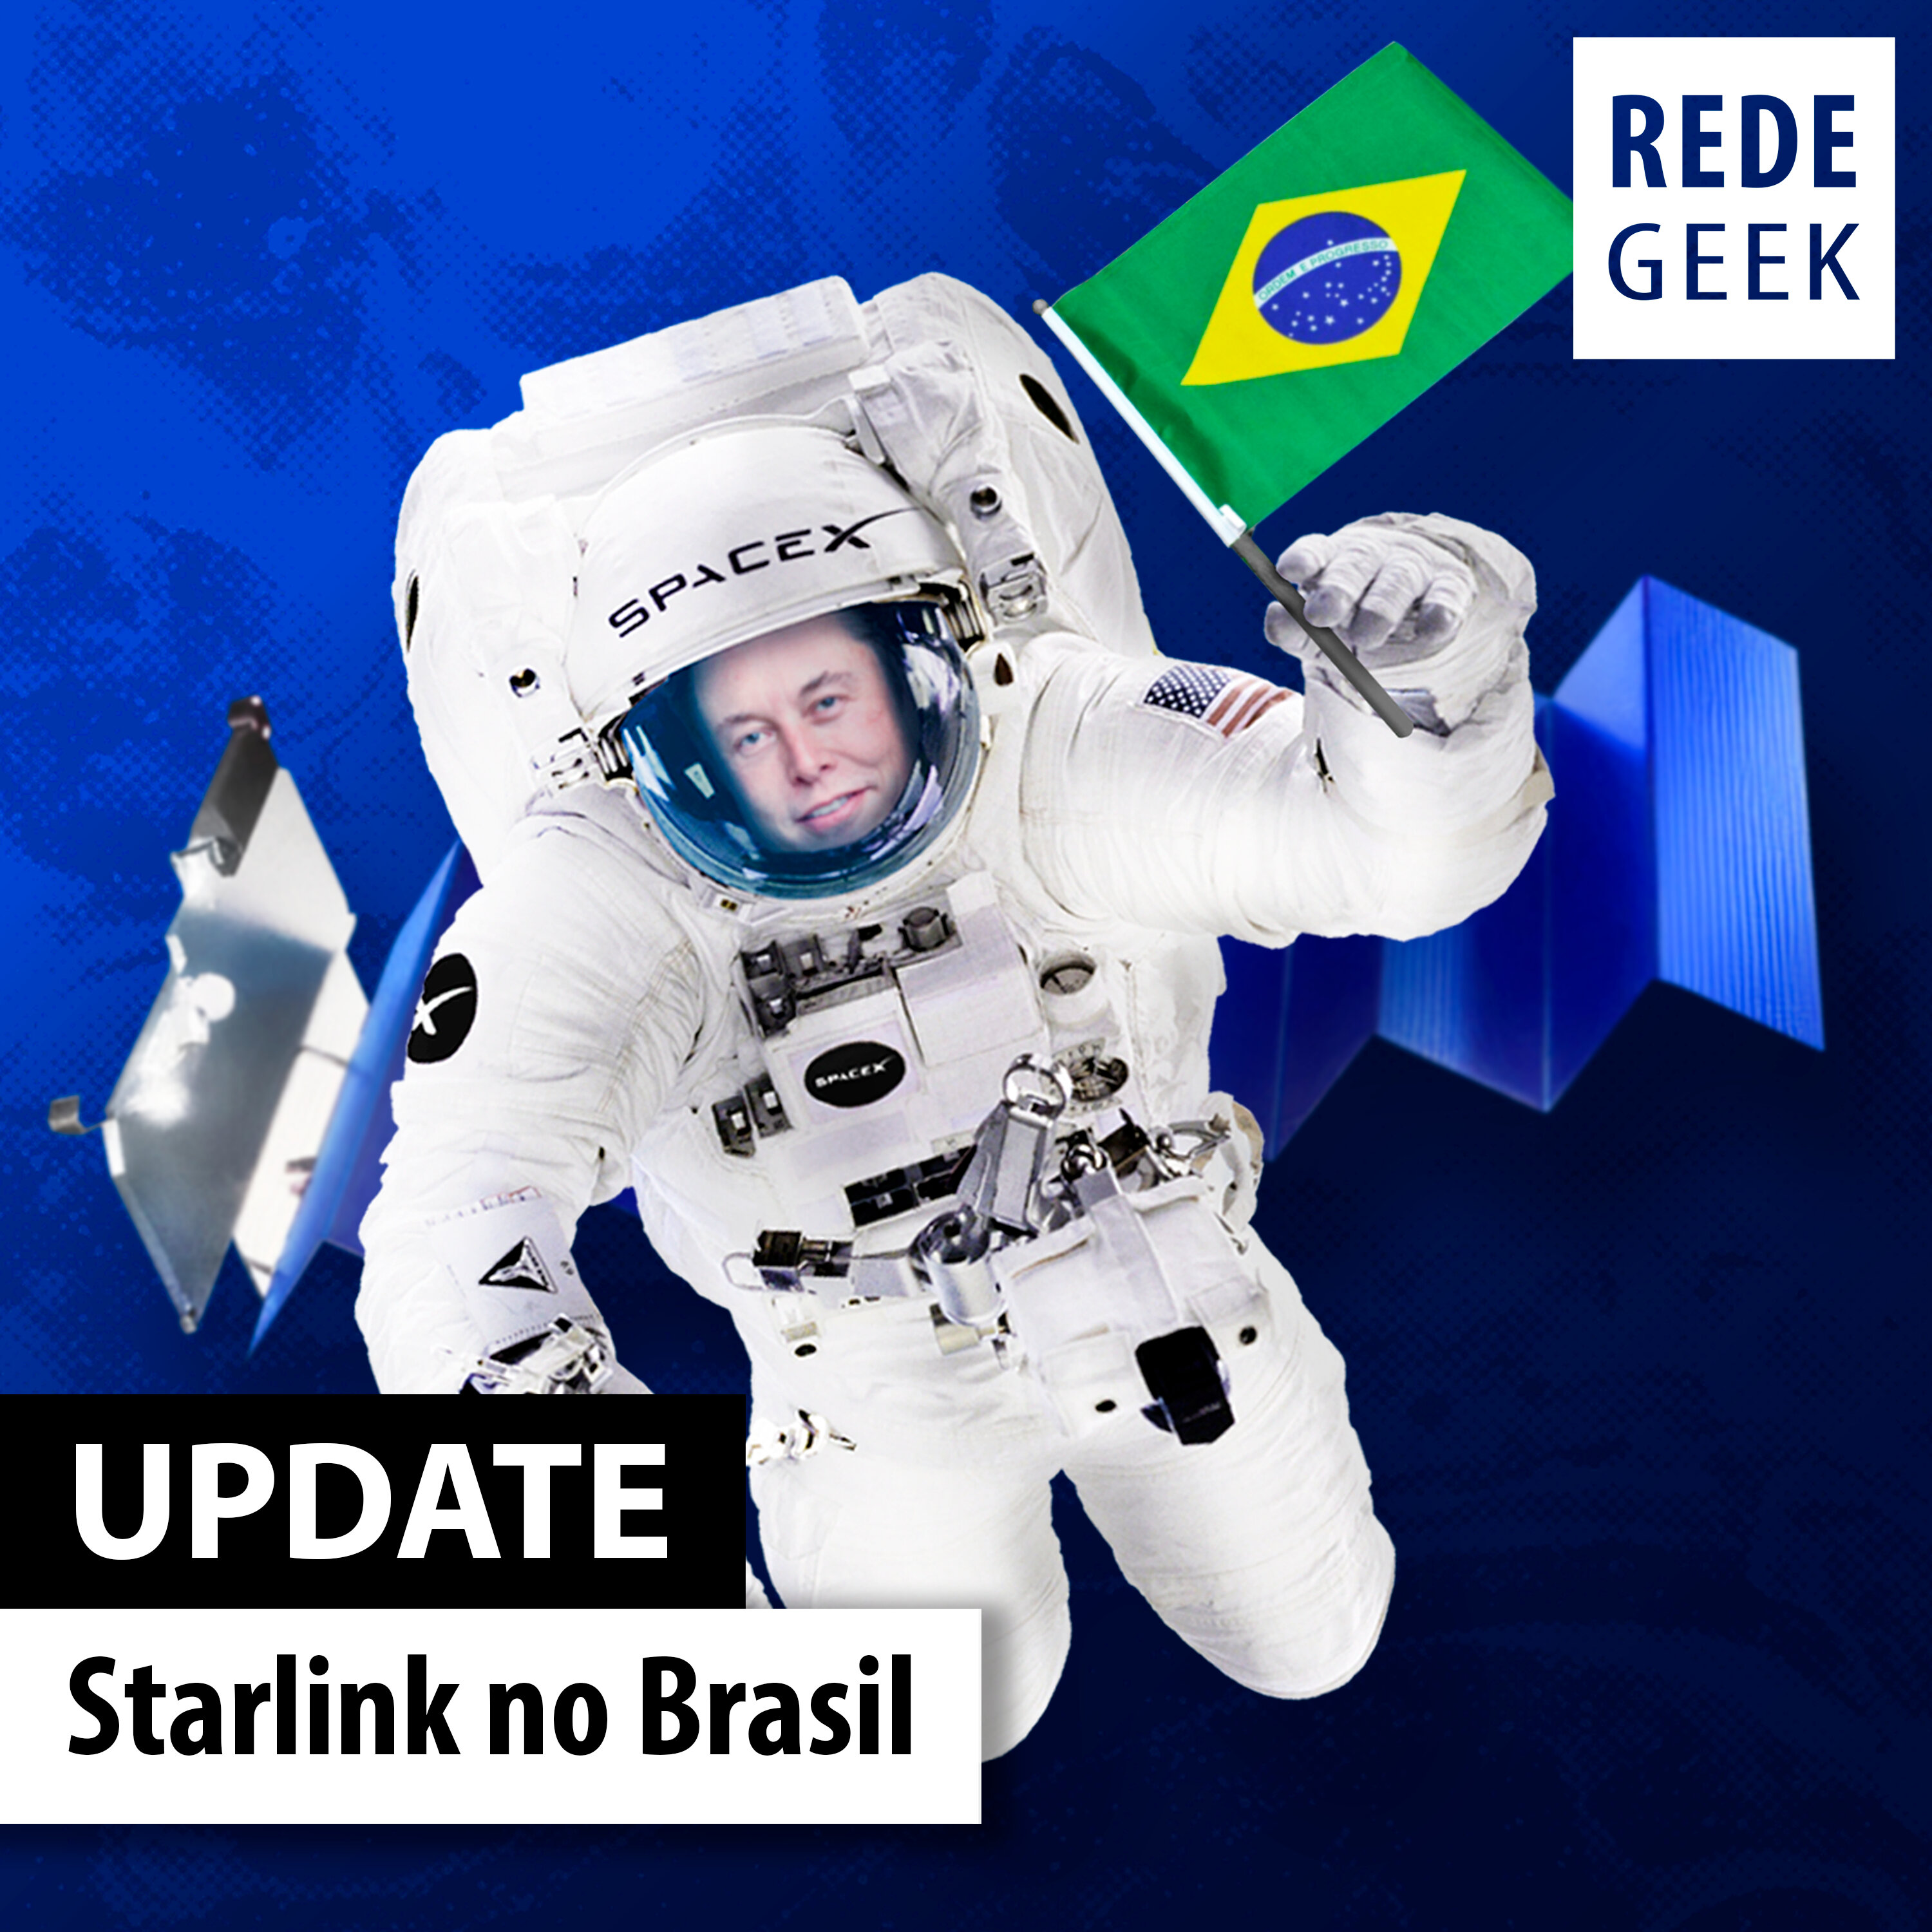 UPDATE - Starlink no Brasil